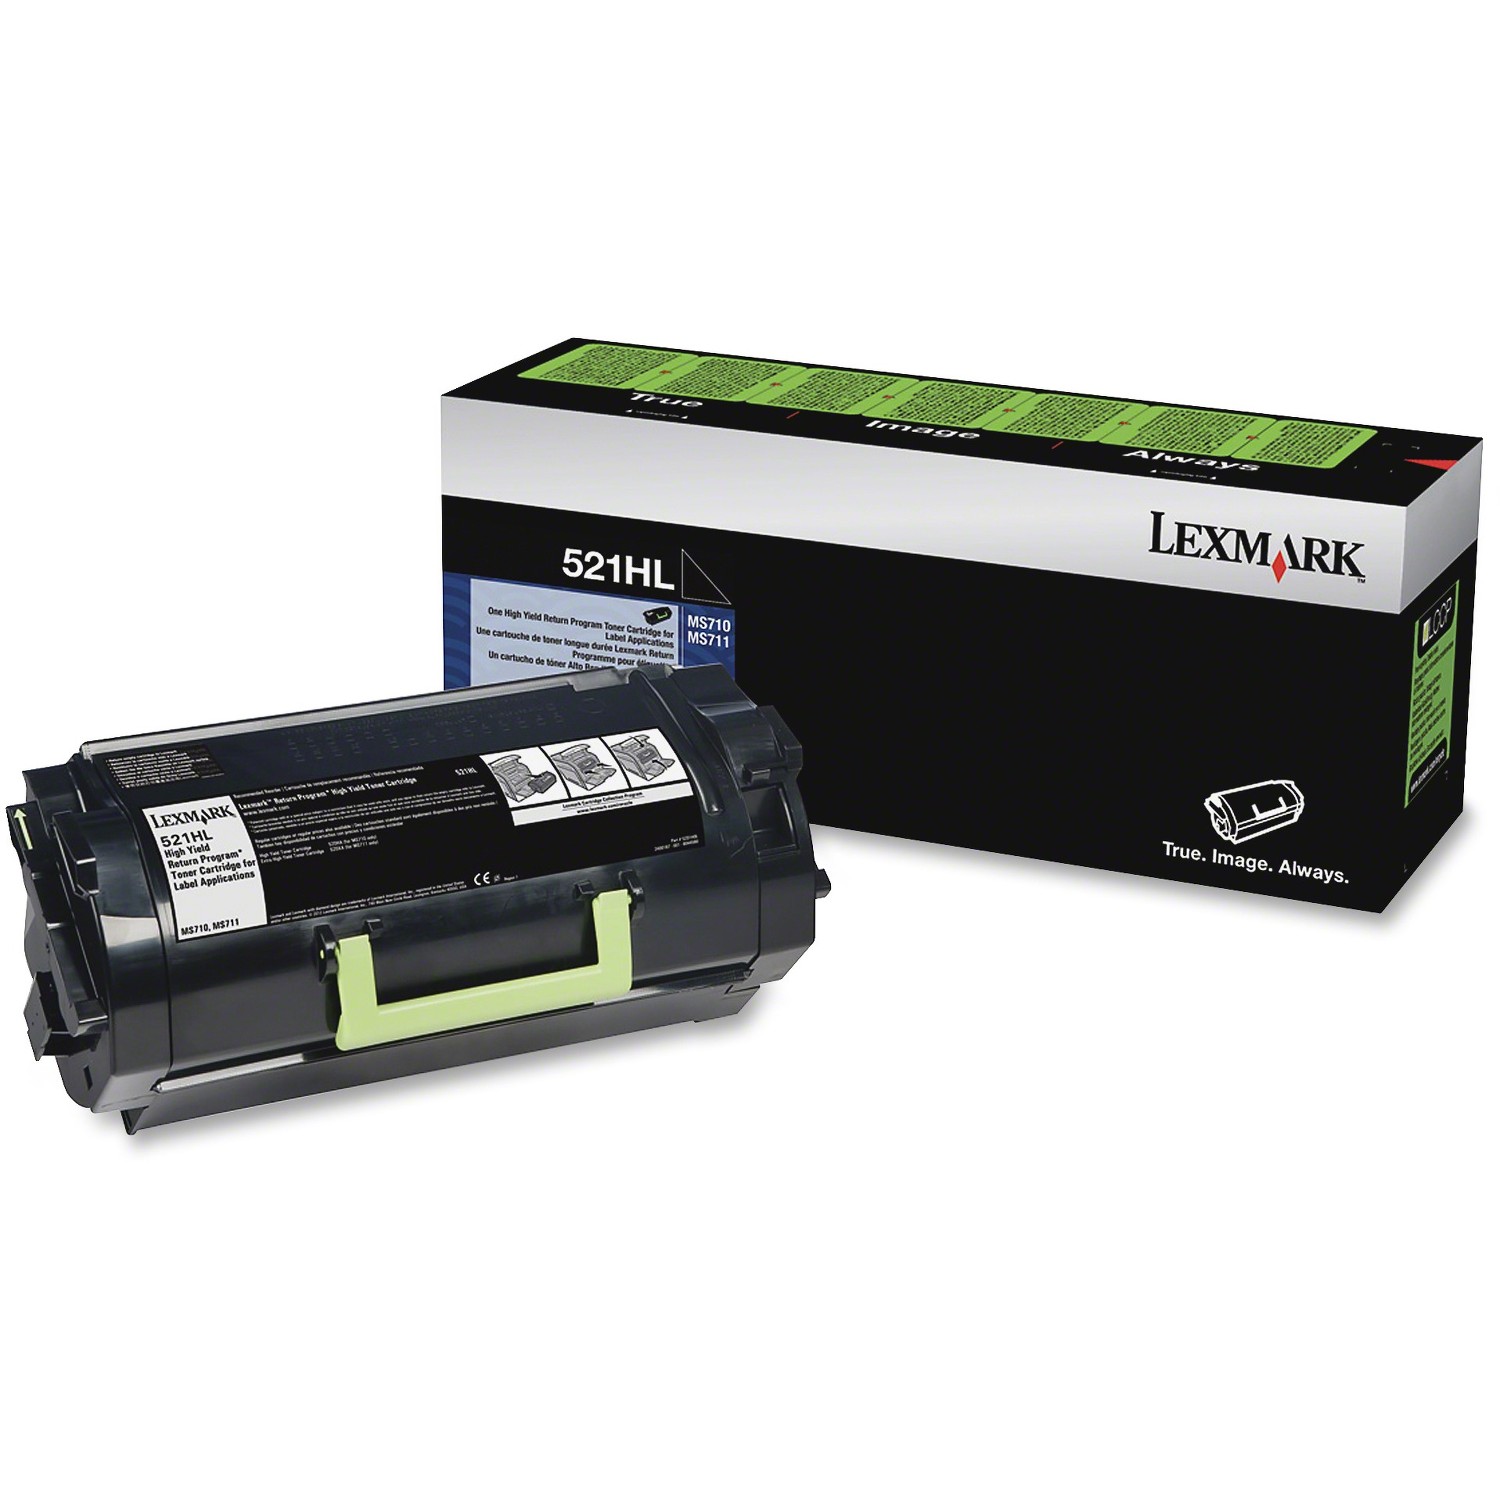 Lexmark 521HL Toner Cartridge